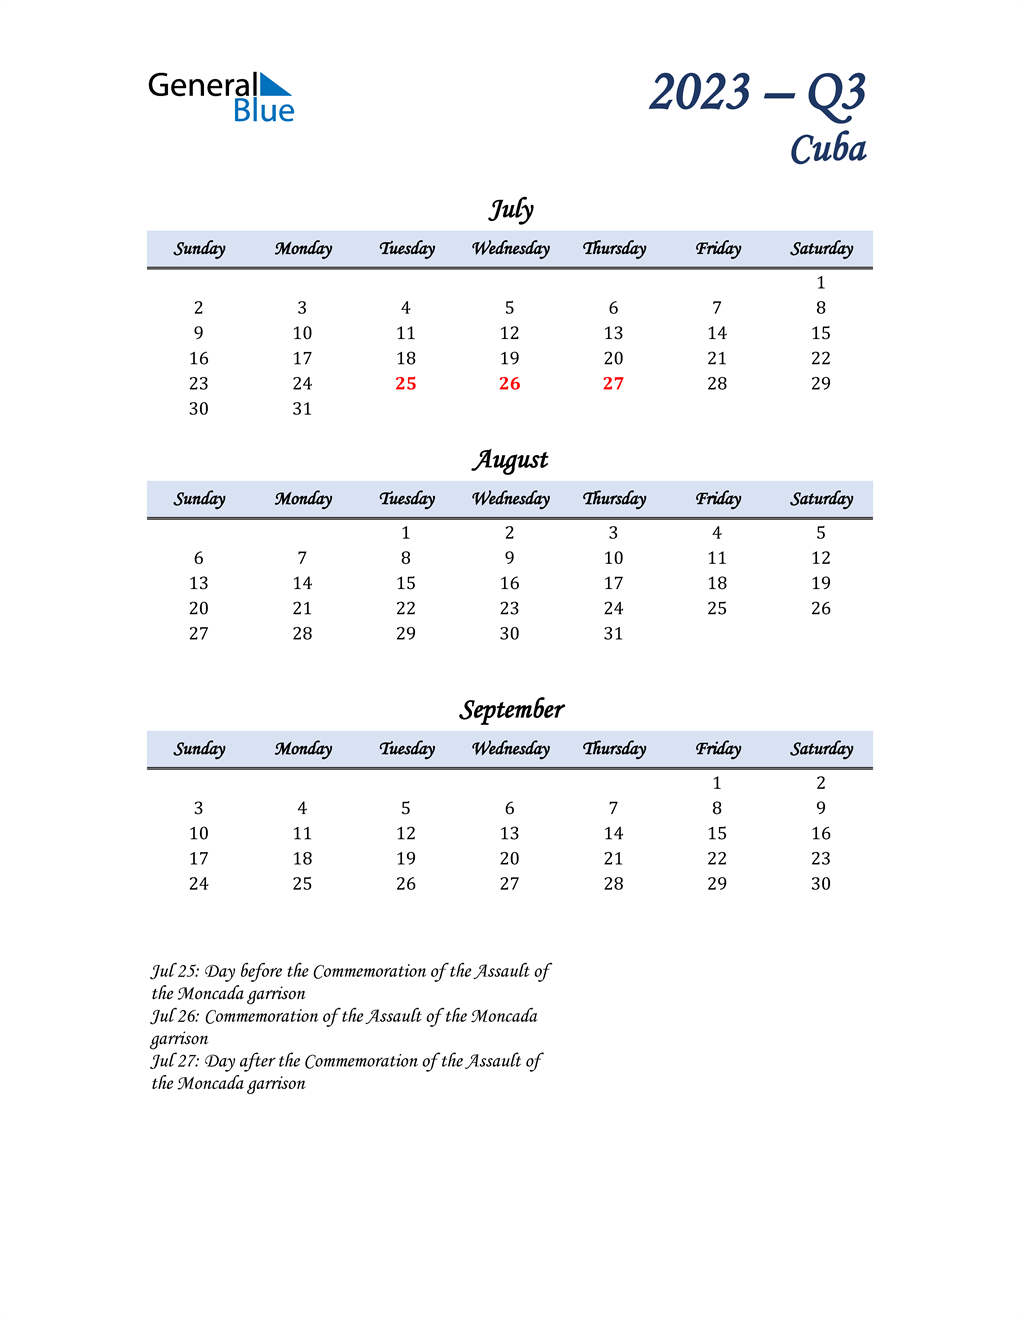  July, August, and September Calendar for Cuba